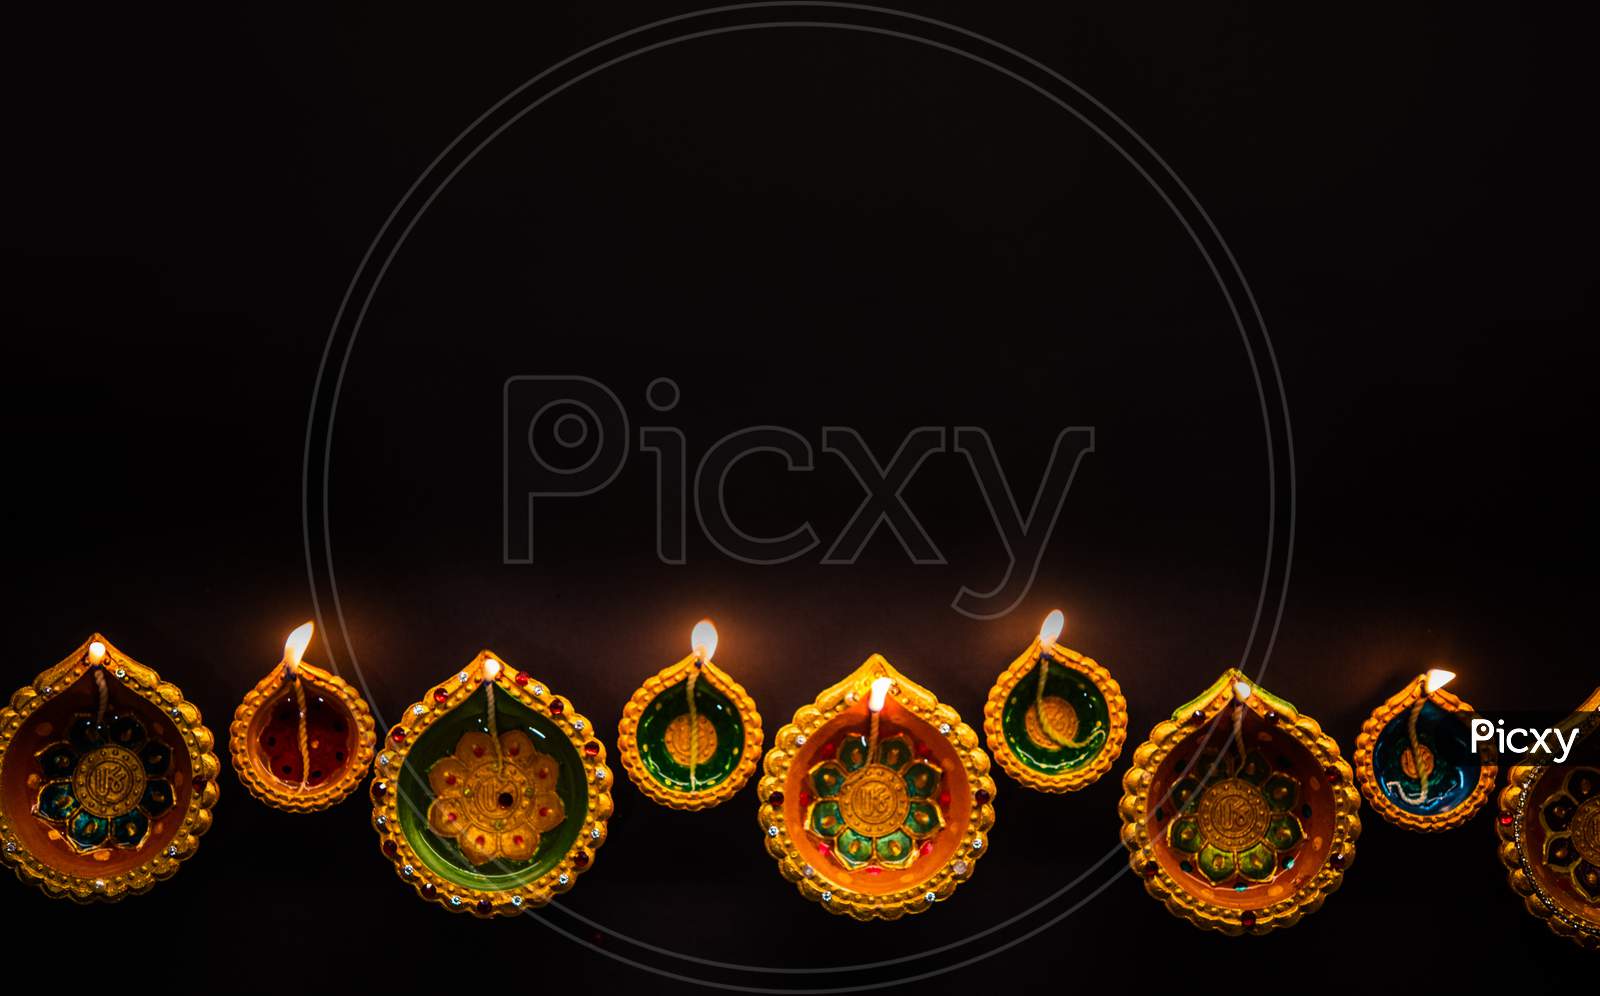 Happy Diwali - Beautiful Diwali Diyas At Night With Flowers